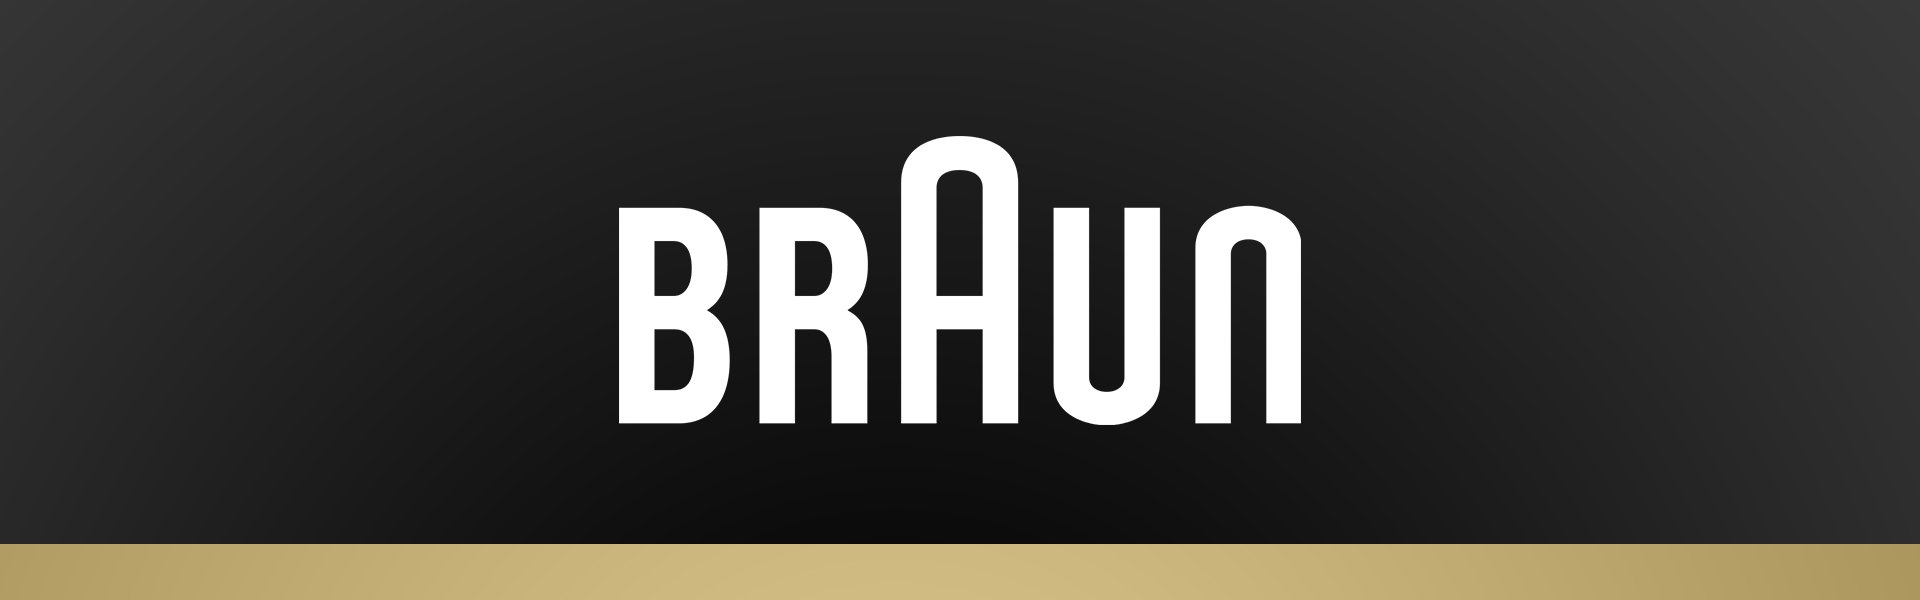 Braun Series 7 70-S4200cs Braun